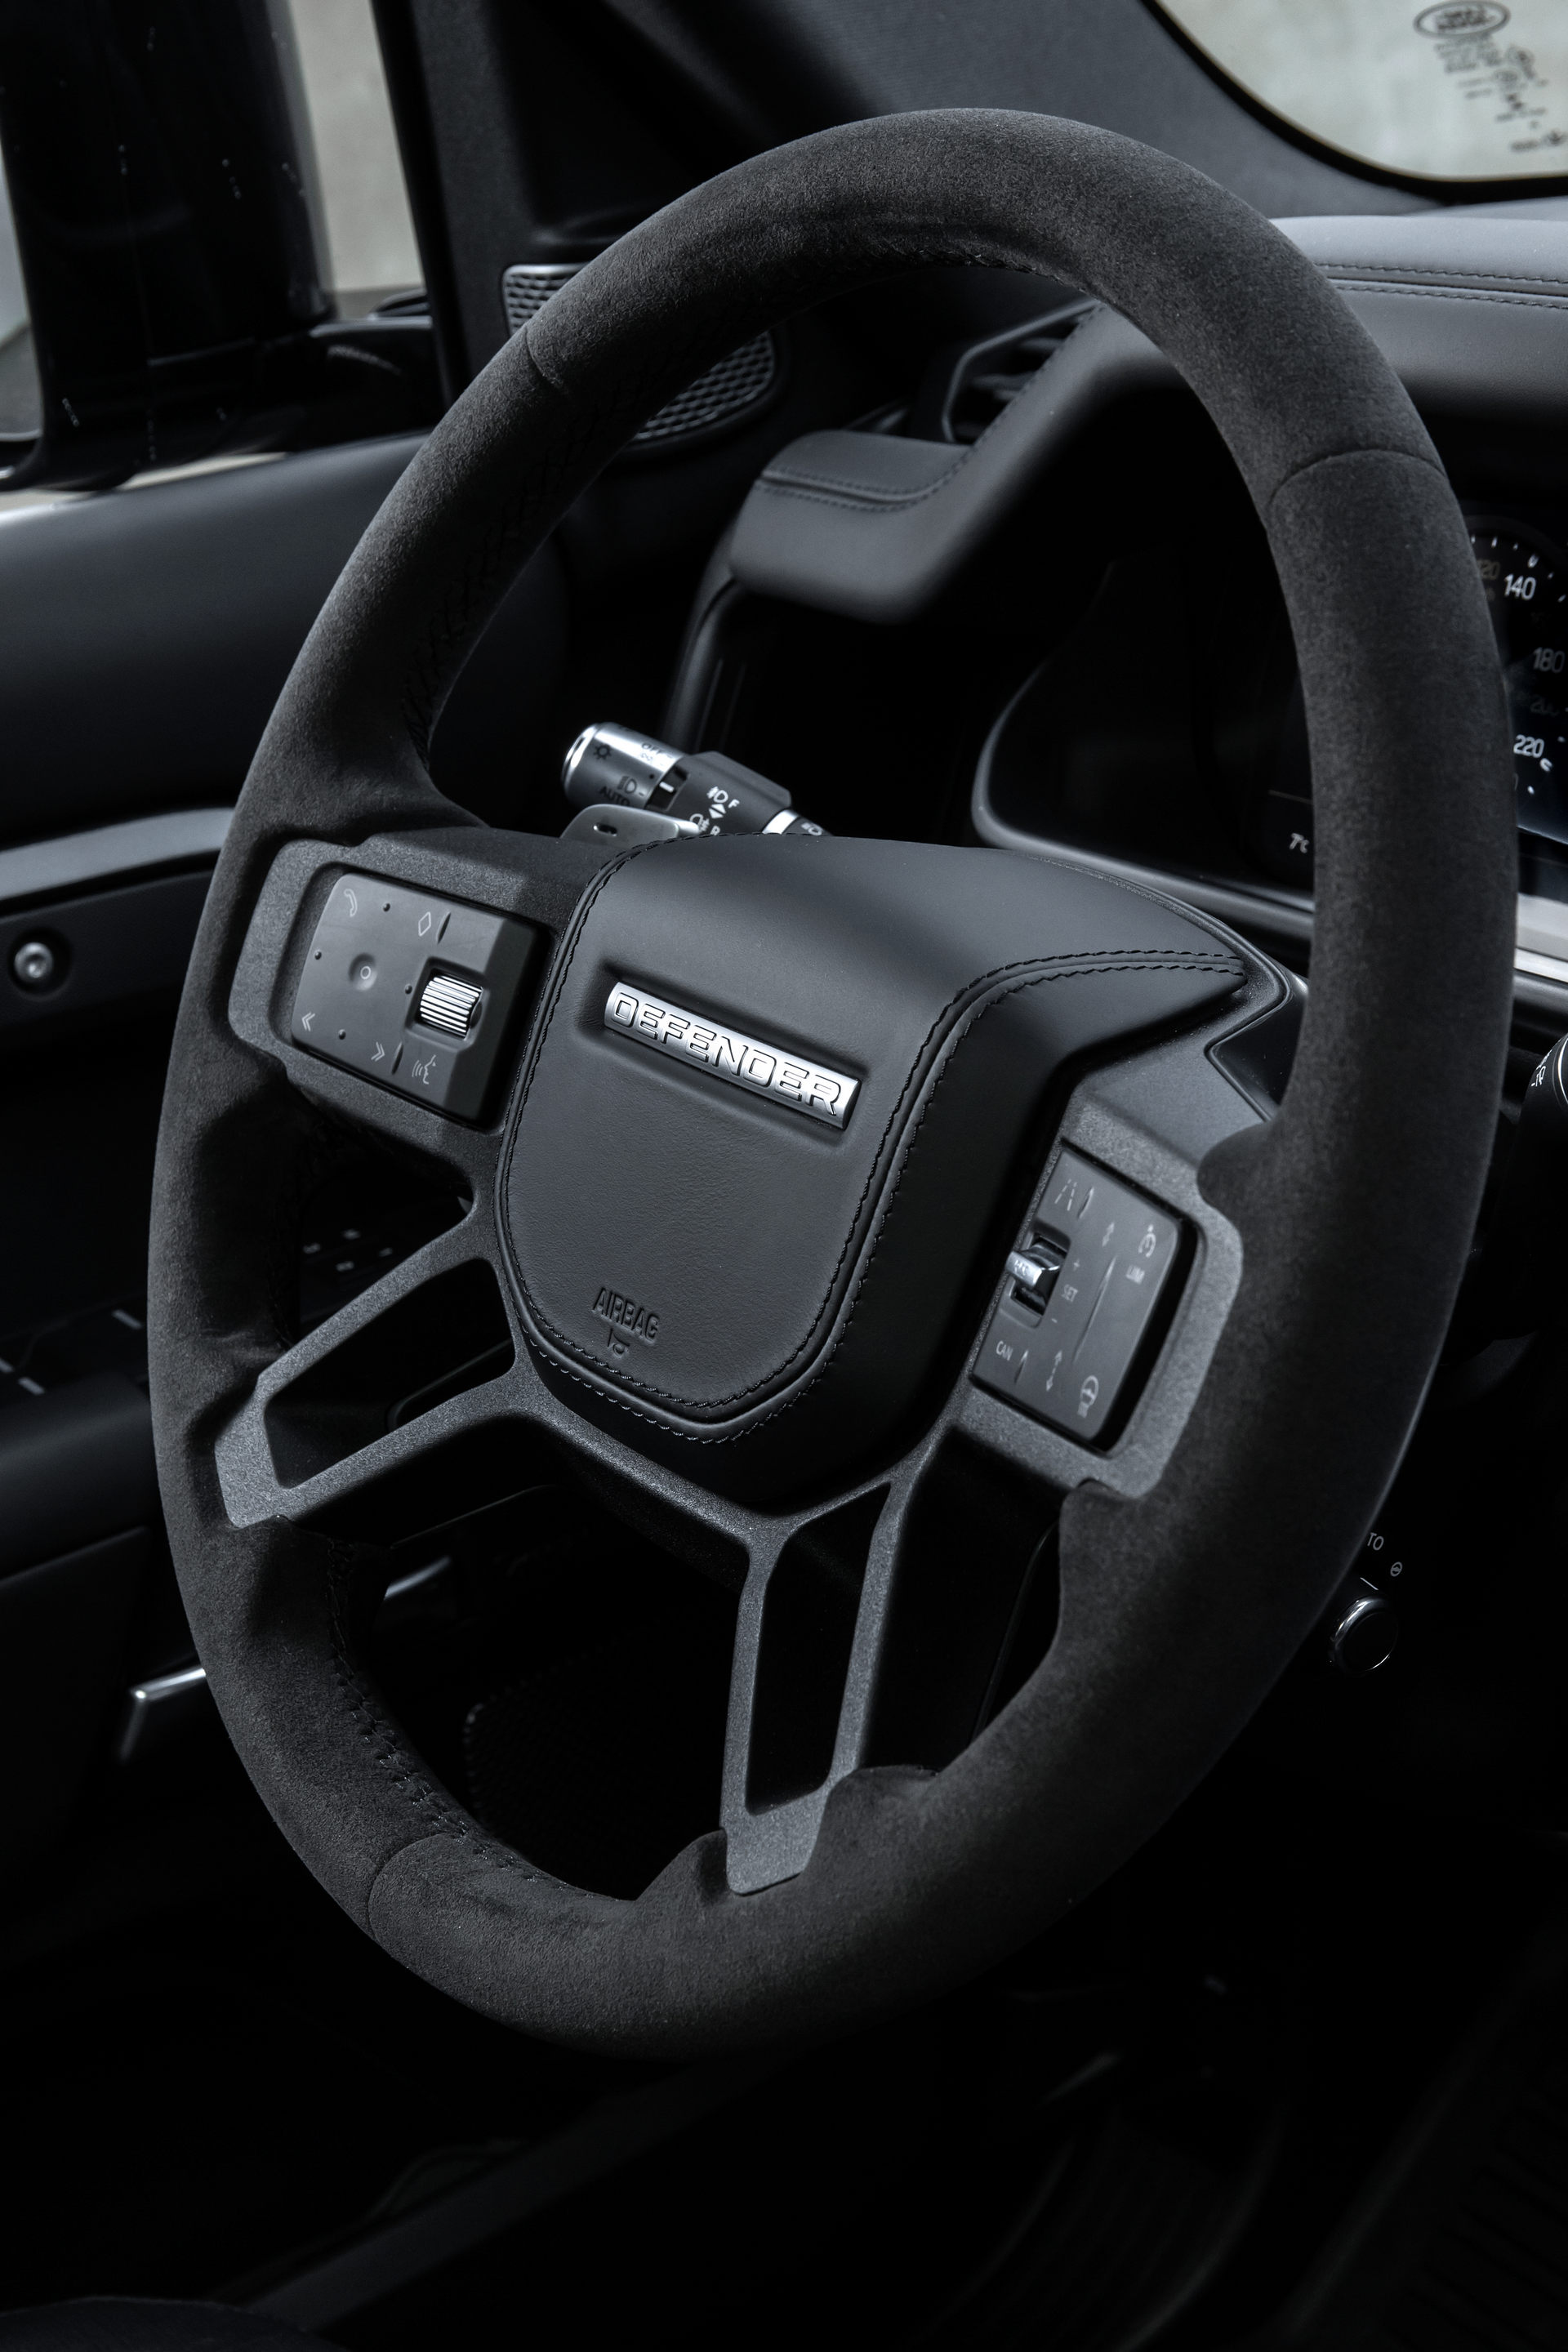 2021 Land Rover Defender V8, 518 beygir güçle geldi